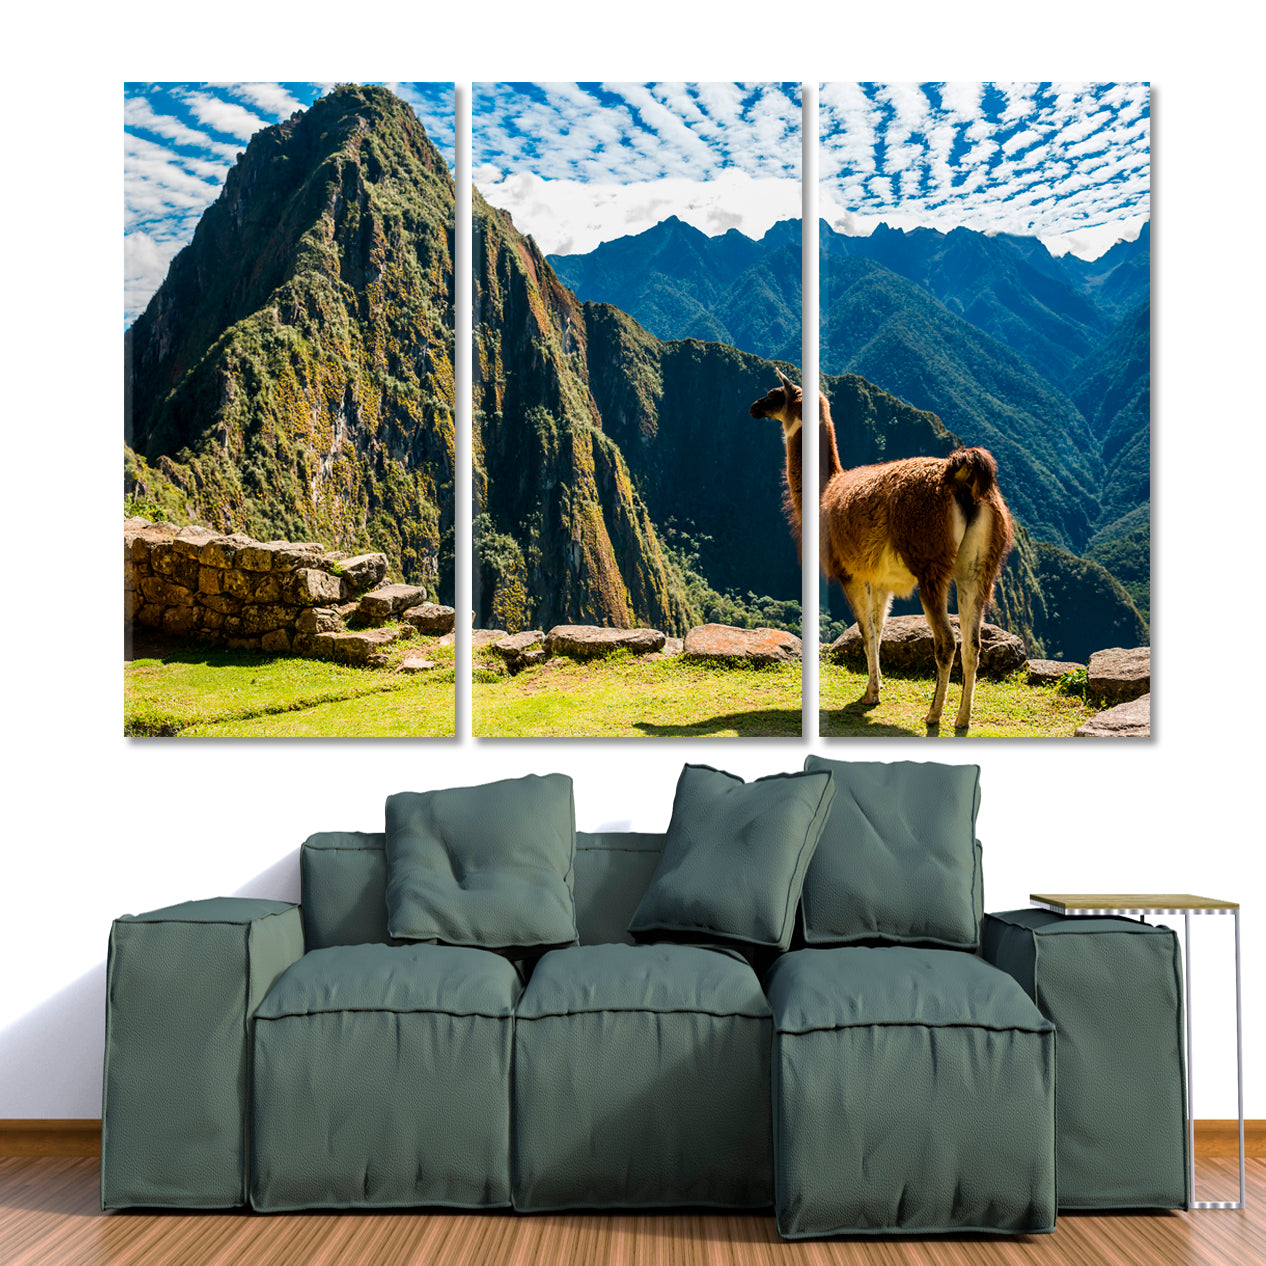 Seven World Wonders Machu Picchu Peru Mountain Ridge Lama Famous Landmarks Artwork Print Artesty 3 panels 36" x 24" 